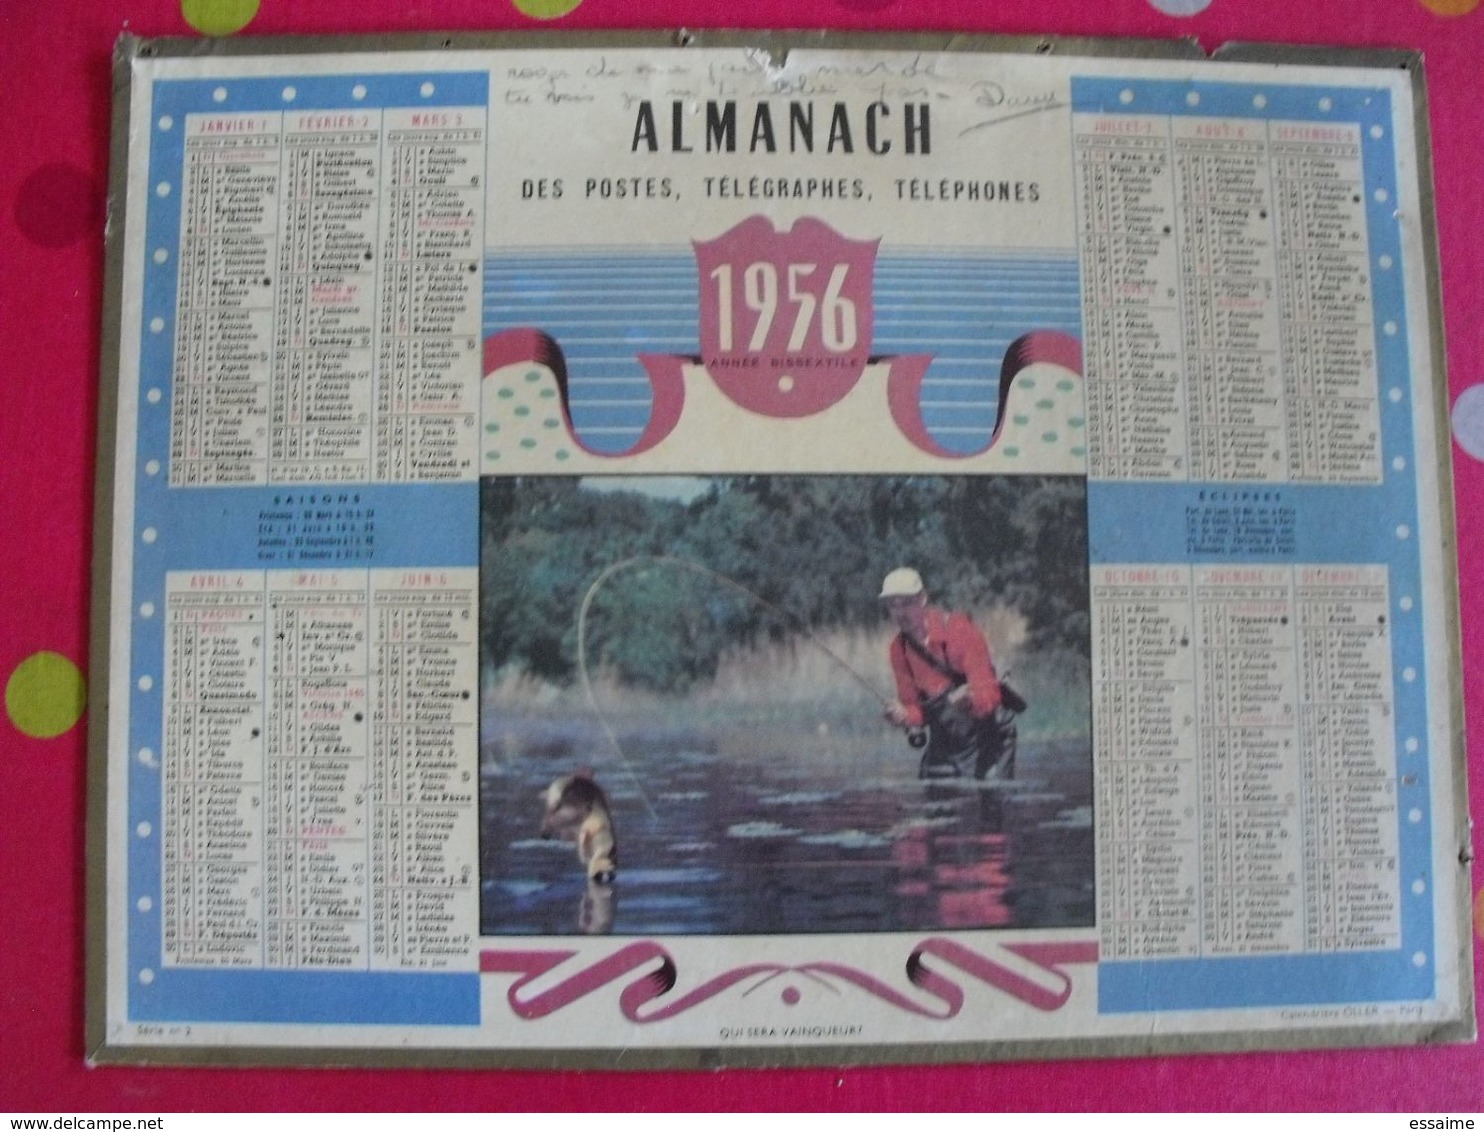 Almanach Des PTT. Cantal. Calendrier Poste 1956. Pêche - Grand Format : 1941-60